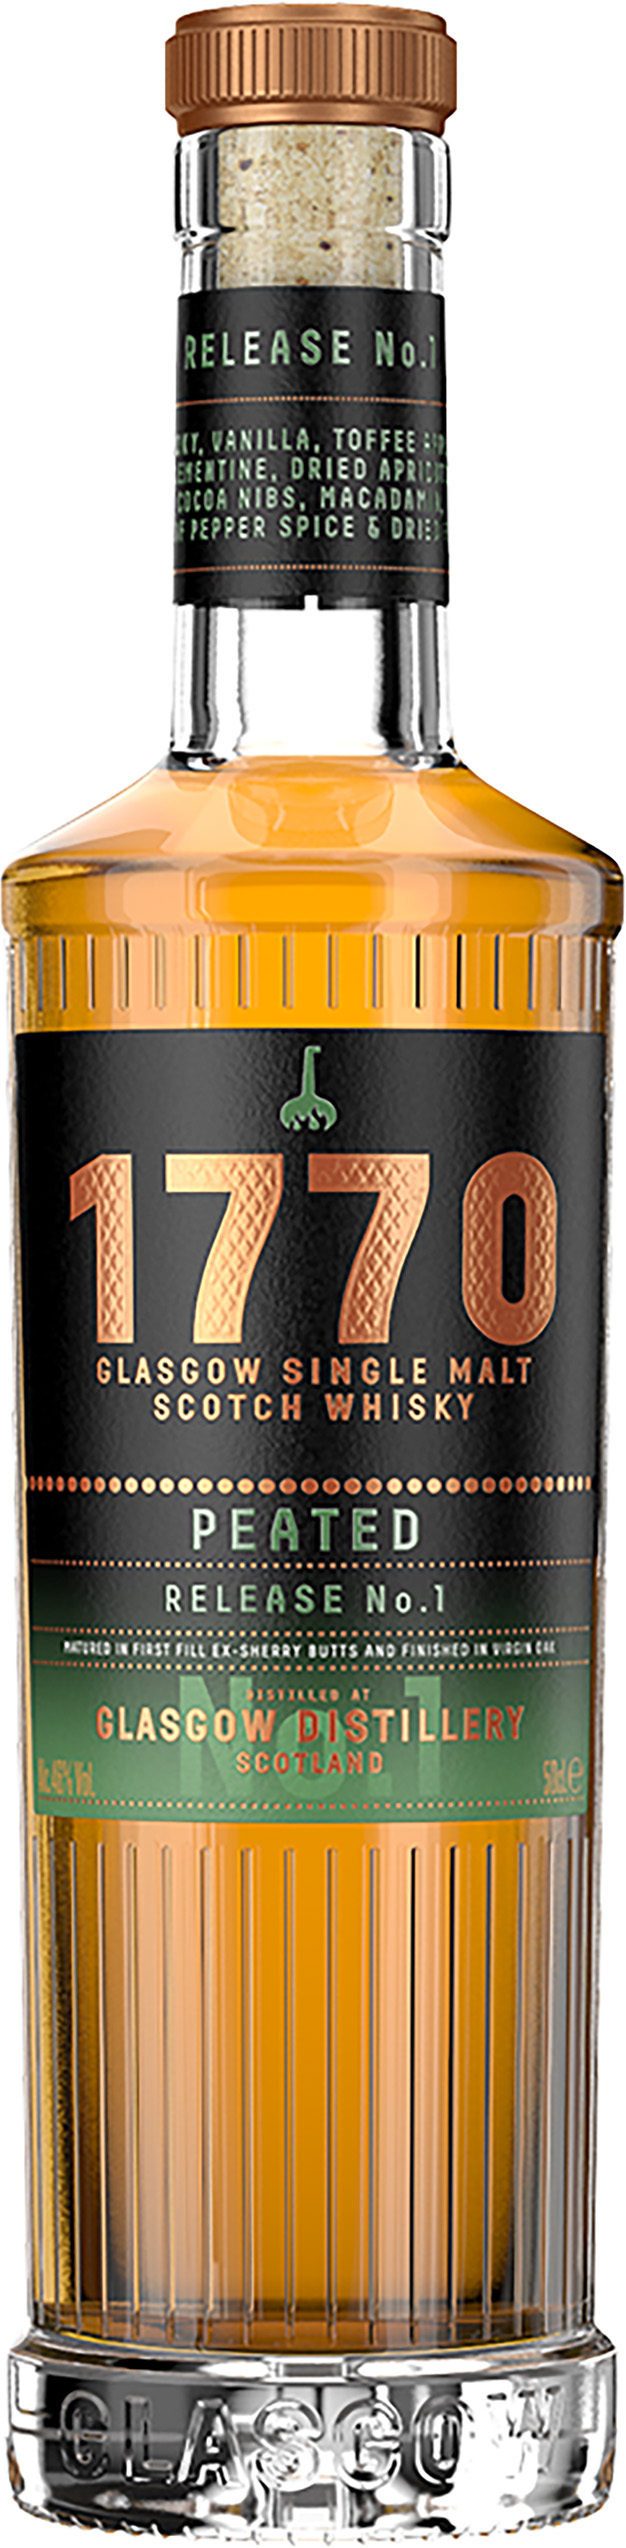 Glasgow 1770 Peated Release No. 1 Single Malt